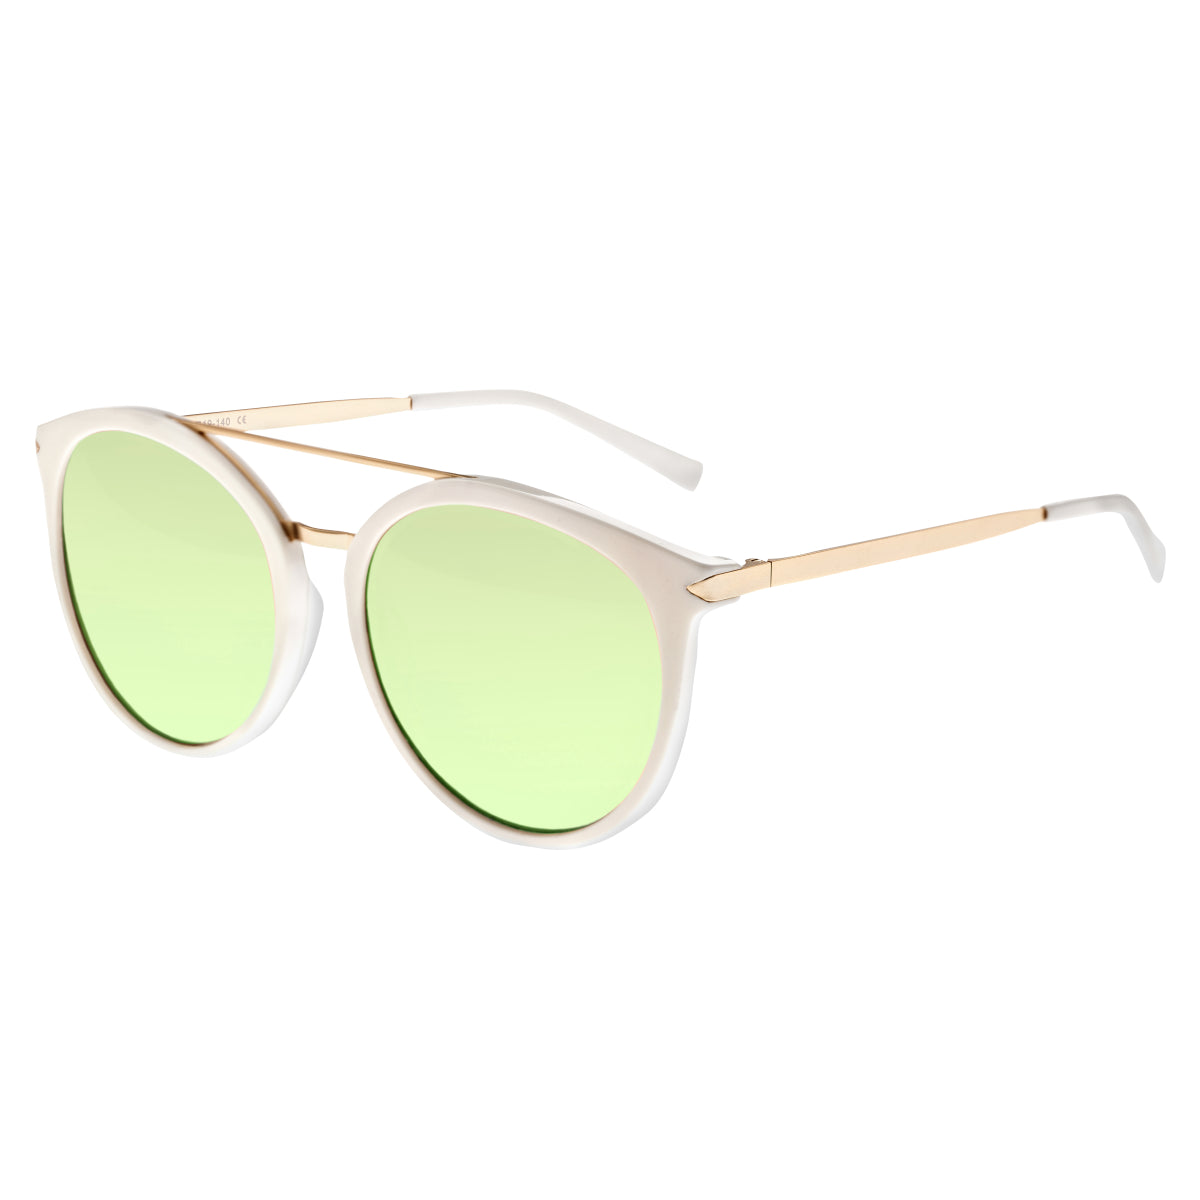 Sixty One Moreno Polarized Sunglasses - White/Mint - SIXS145PGX